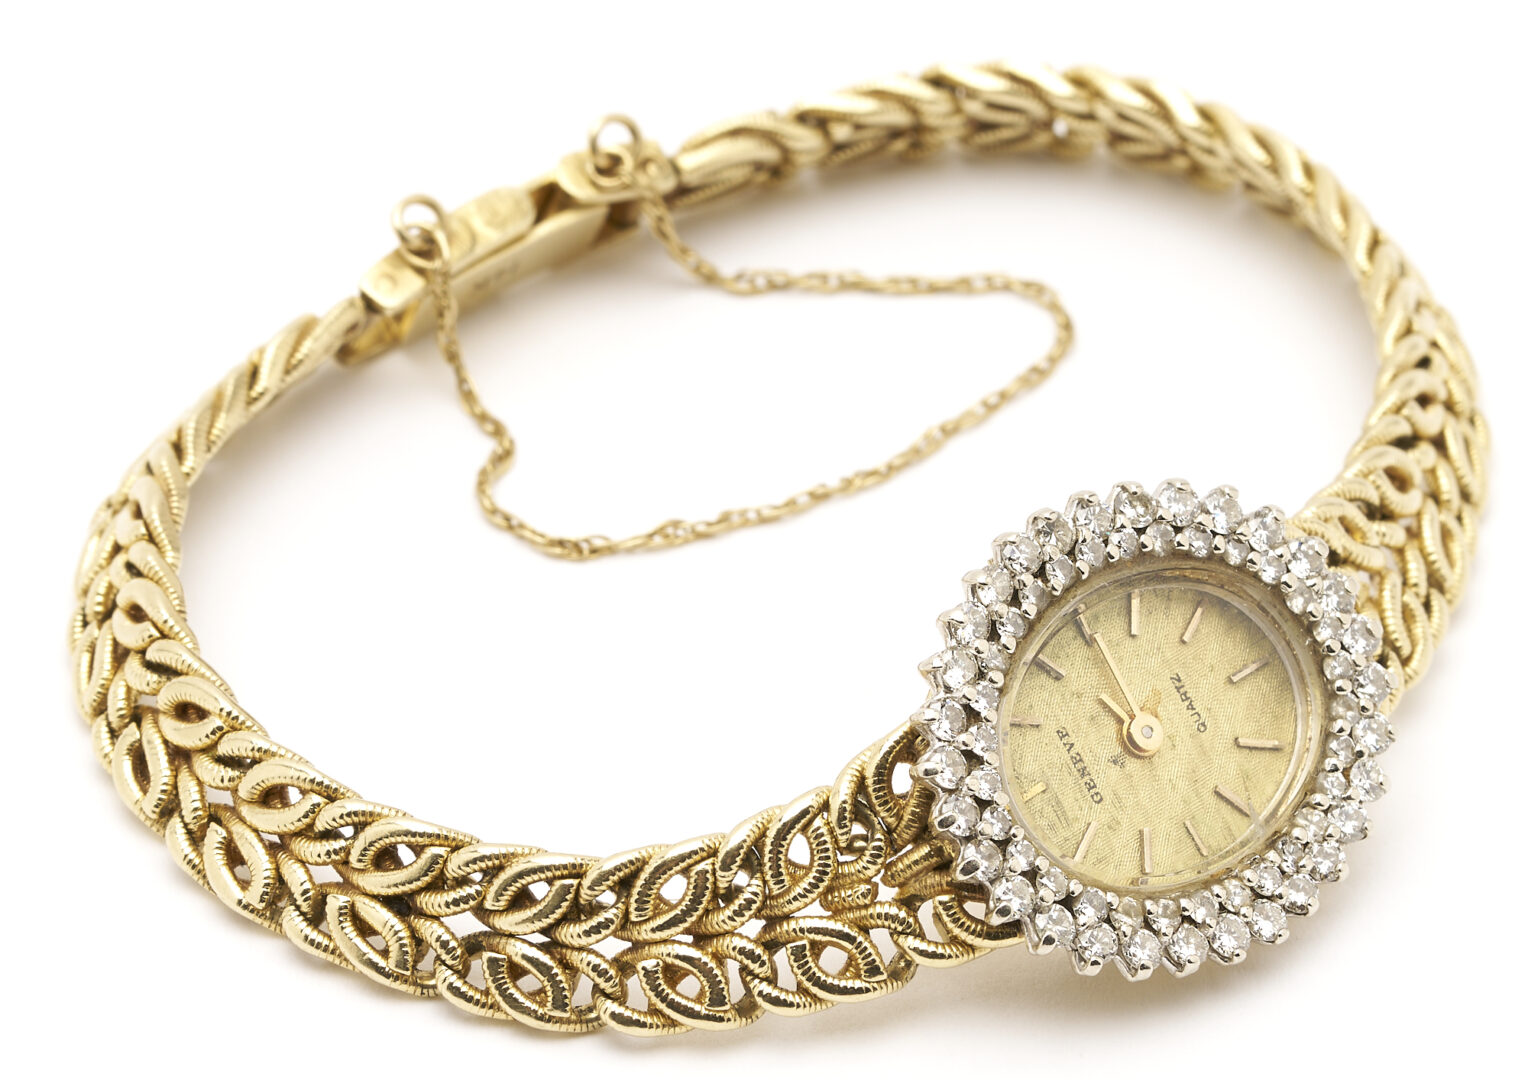 Lot 262: Ladies' 14K Gold & Diamond Wristwatch, Geneve